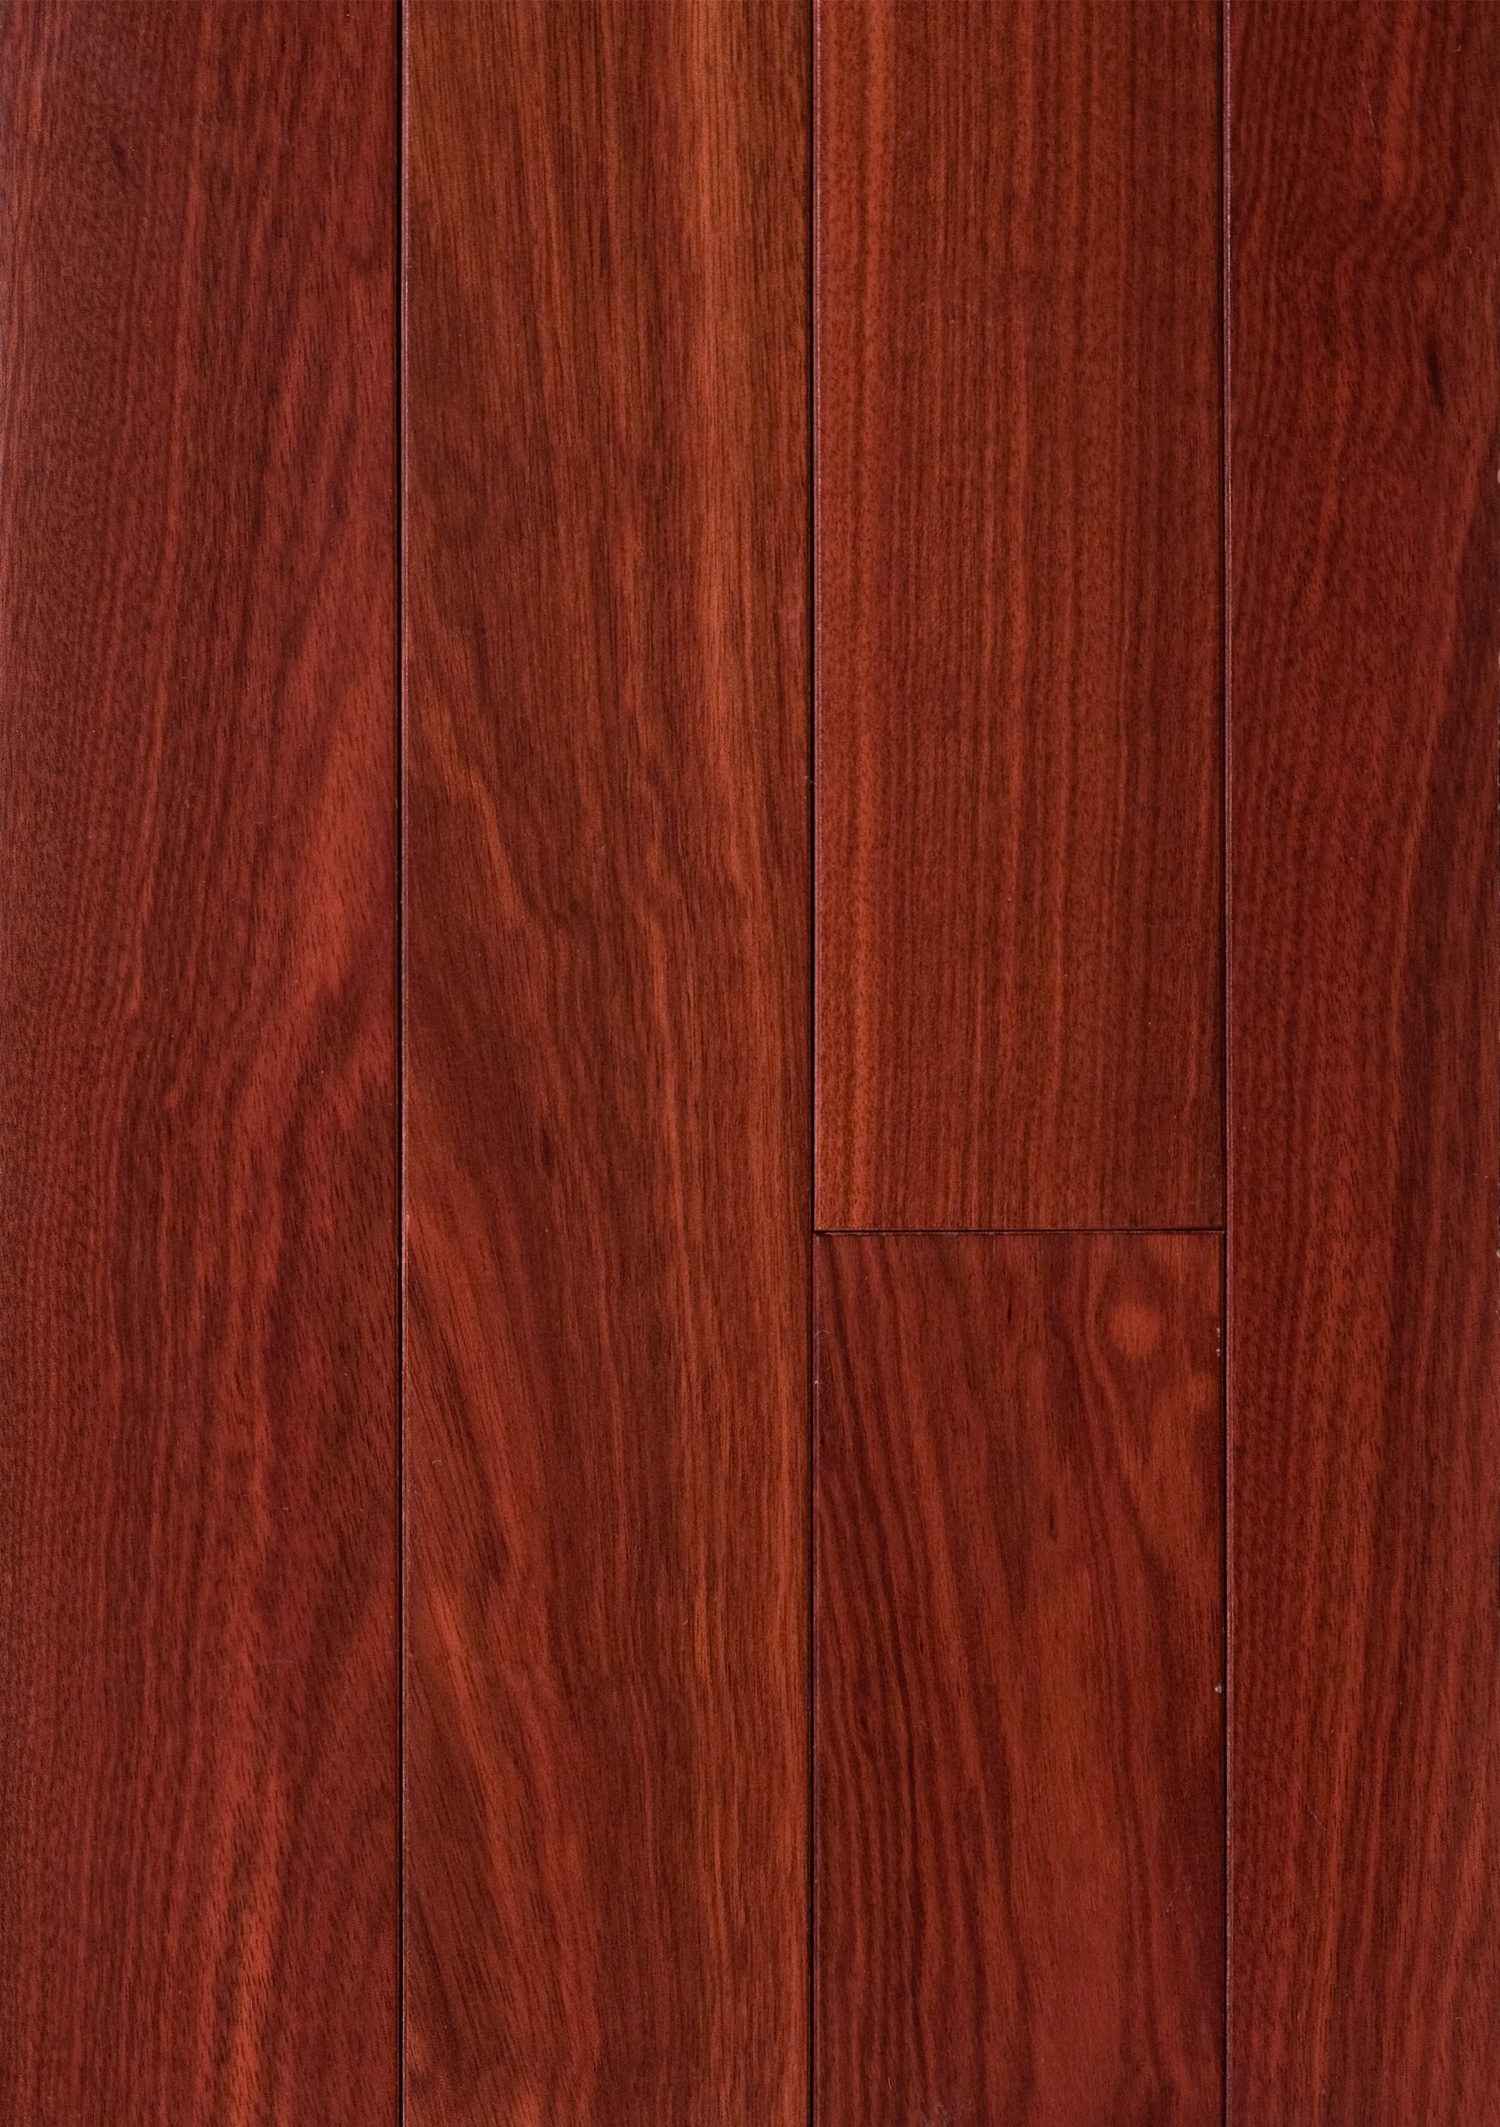 Bellawood 3 4 In Bloodwood Solid Hardwood Flooring 25 Wide Ll